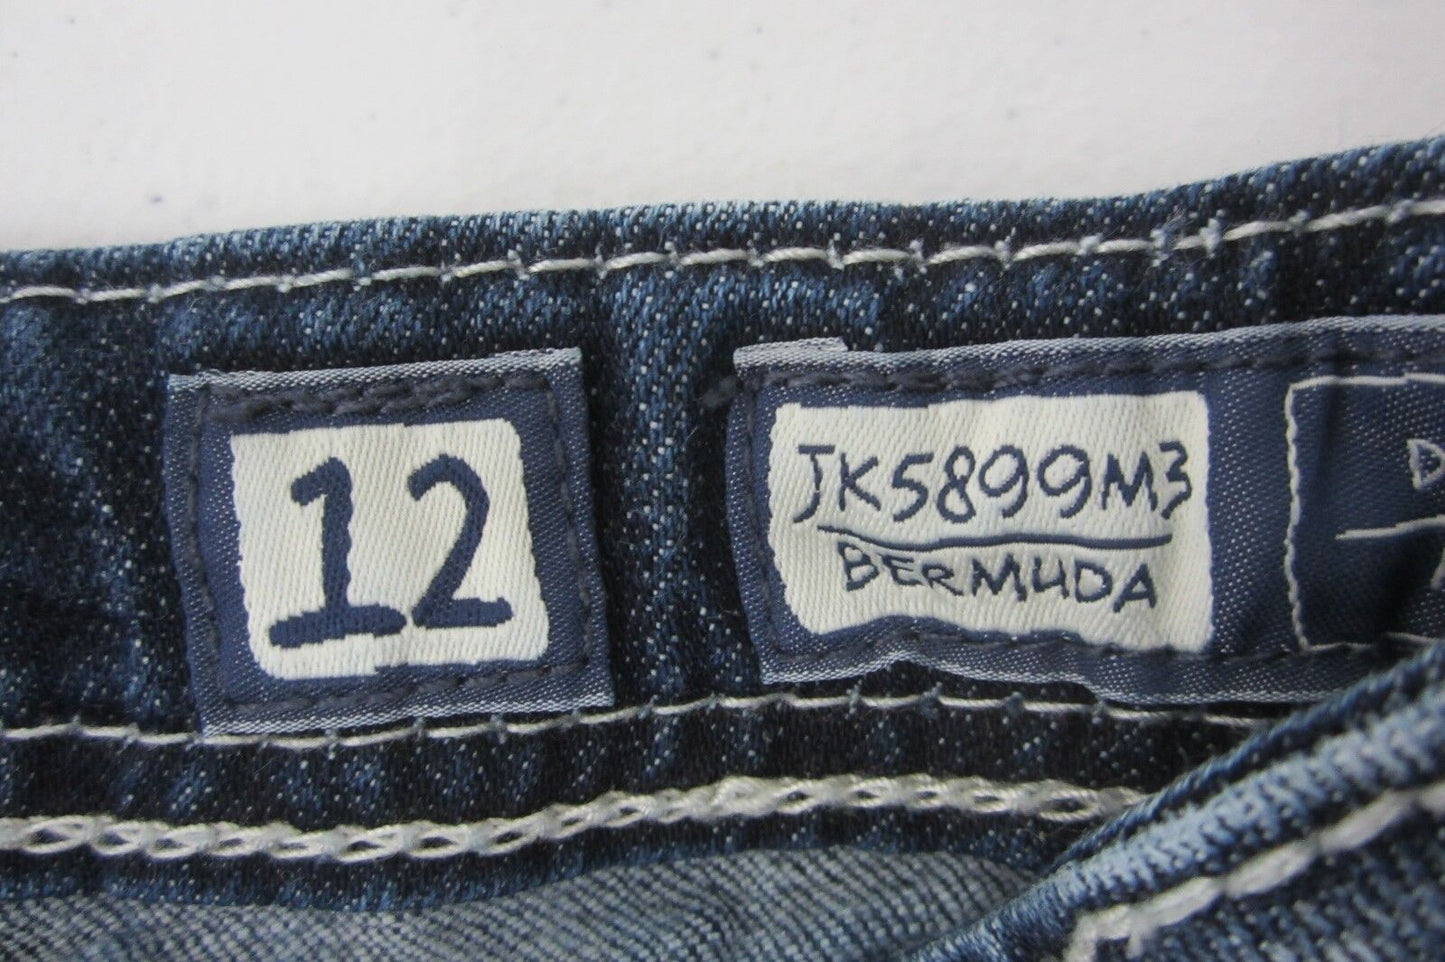 *MINT*   Miss Me Jeans Bermuda Shorts Girls Size 12 JK5899M3 Crystal Cross Sz 12